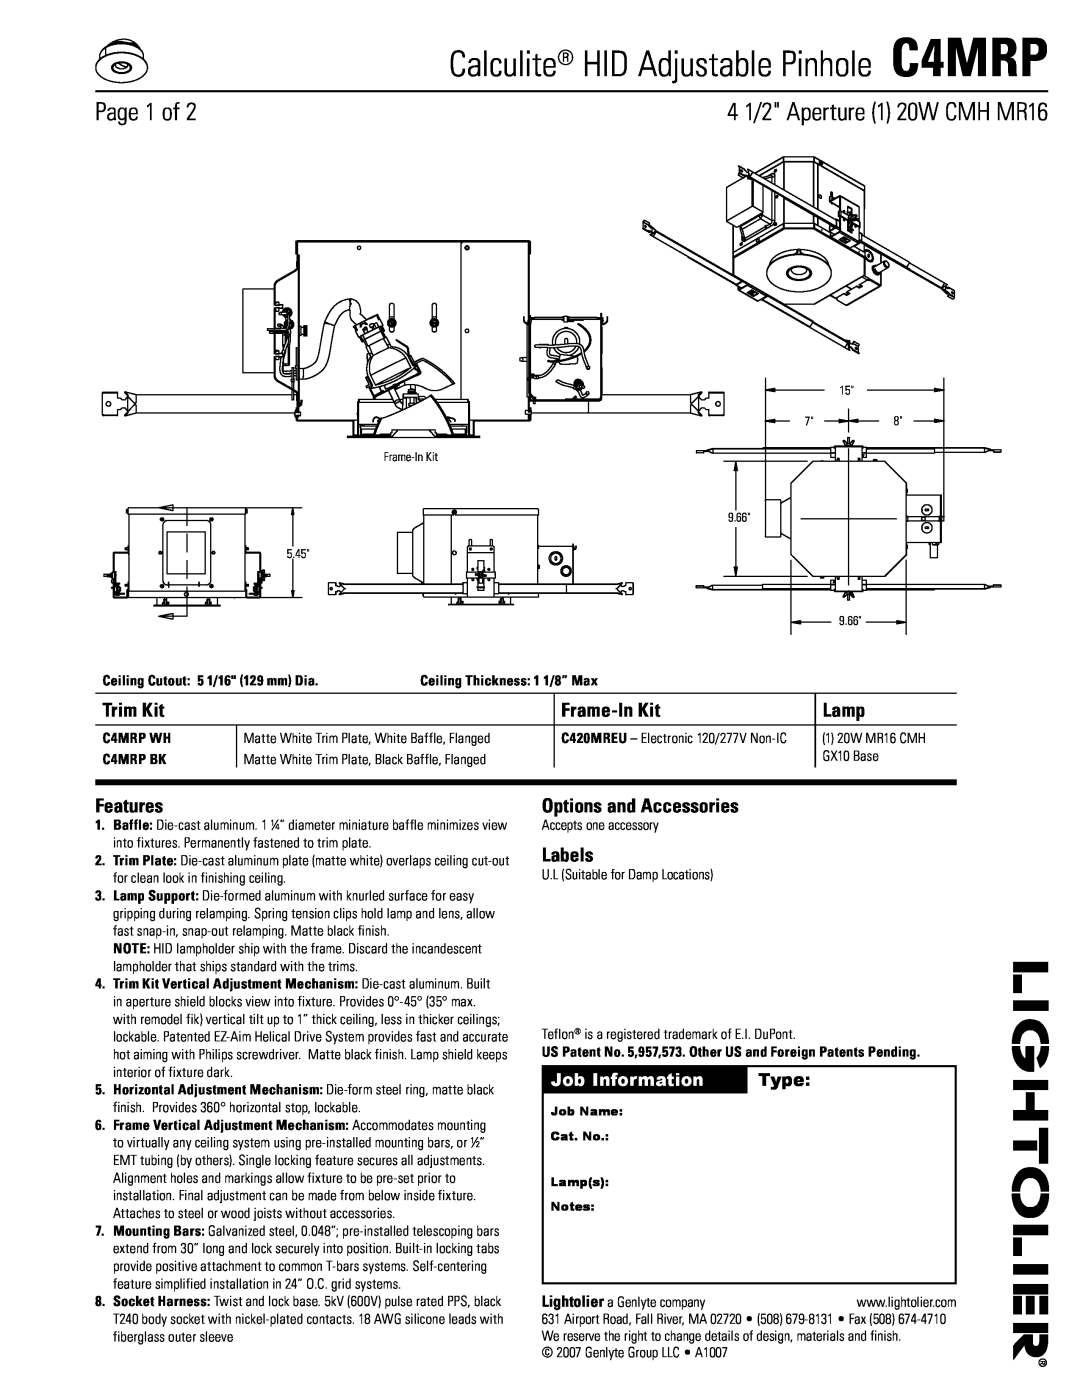 Lightolier manual Calculite HID Adjustable Pinhole C4MRP, Page of, 4 1/2 Aperture 1 20W CMH MR16, Job Information, Type 